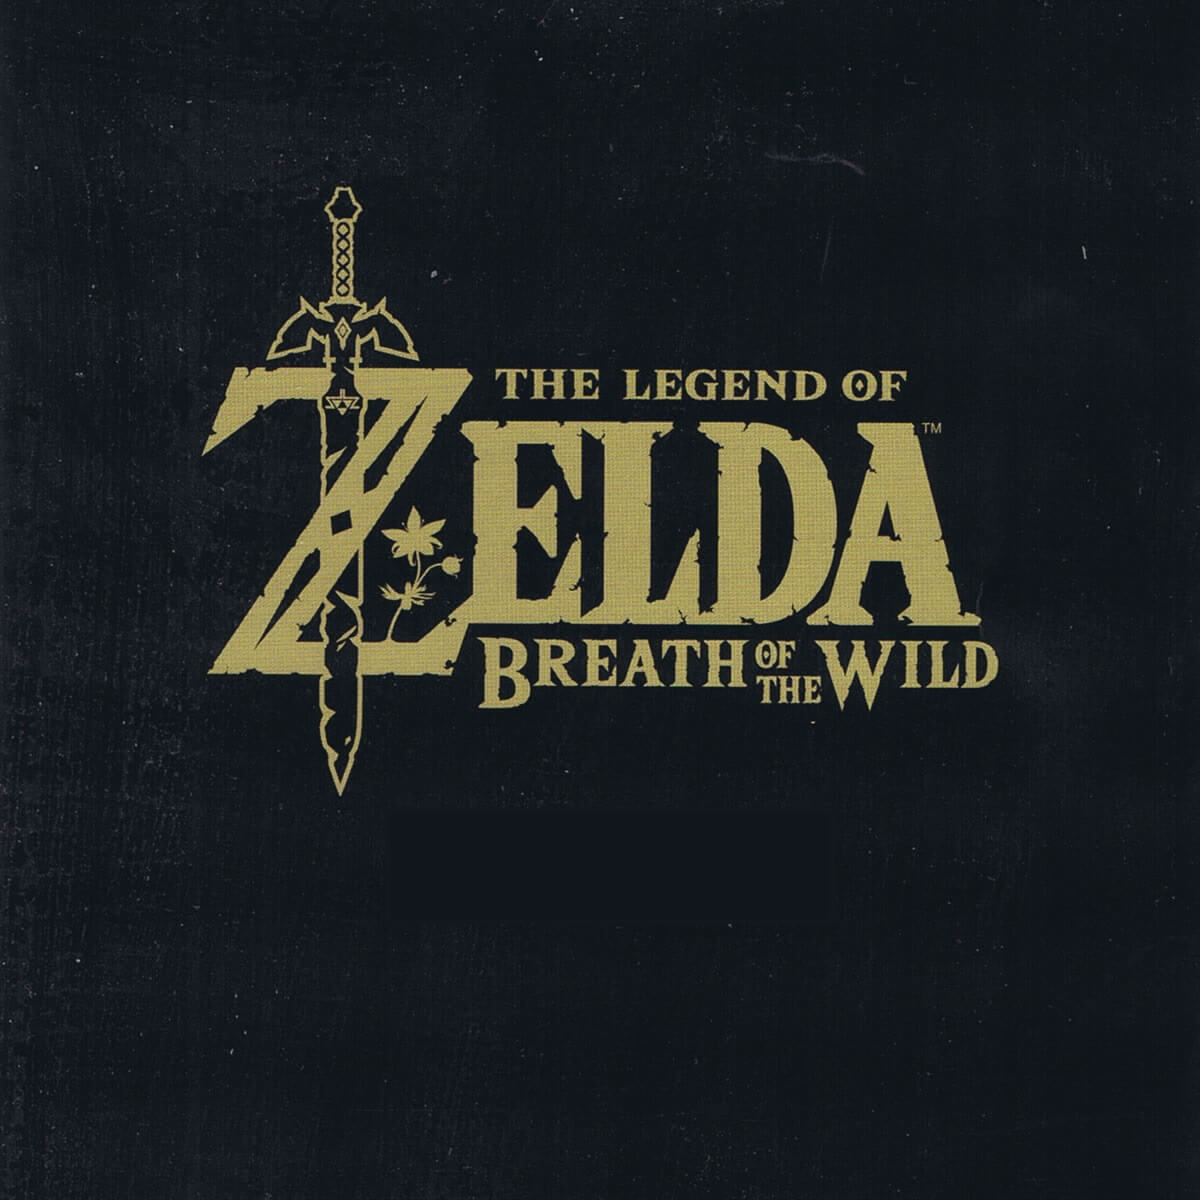 Utopia89 - The Legend of Zelda: Breath of the Wild For PC